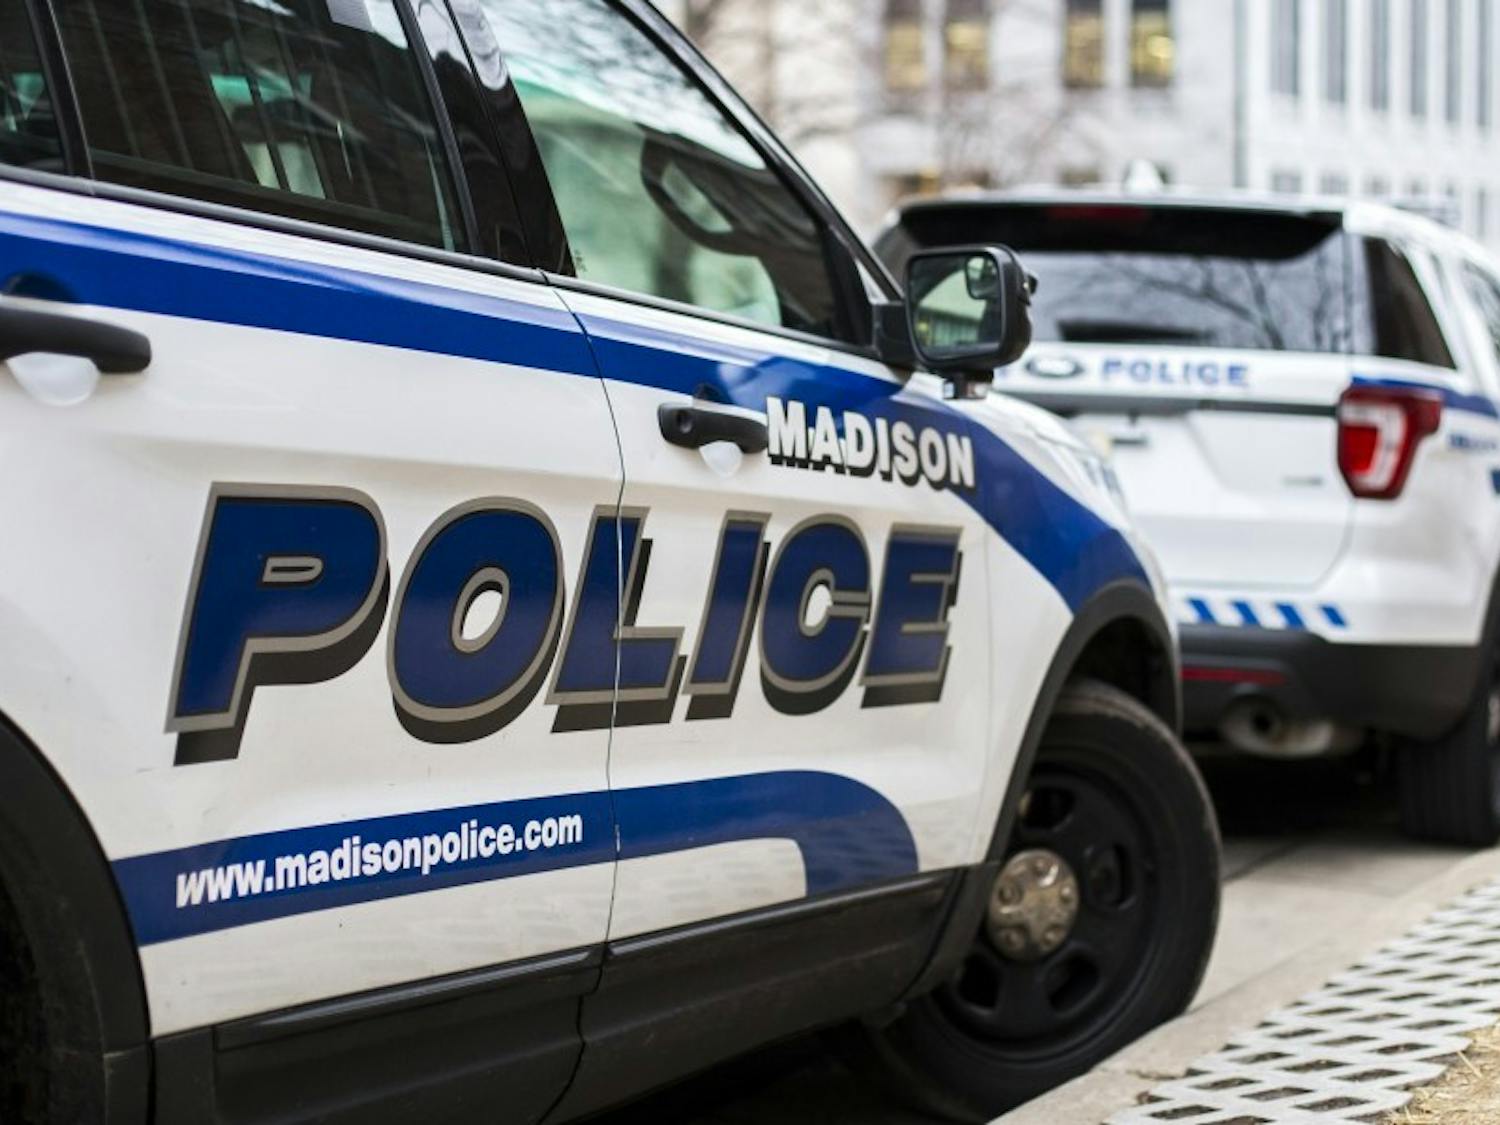 Madison Police Car